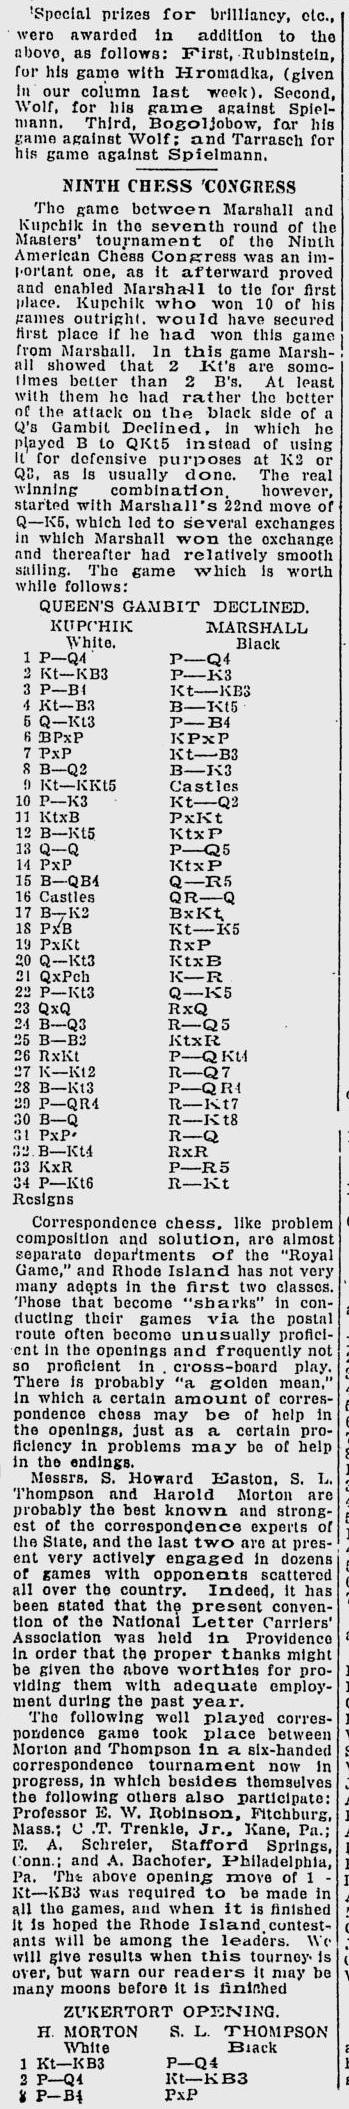 1923.09.08-04 Providence News.jpg